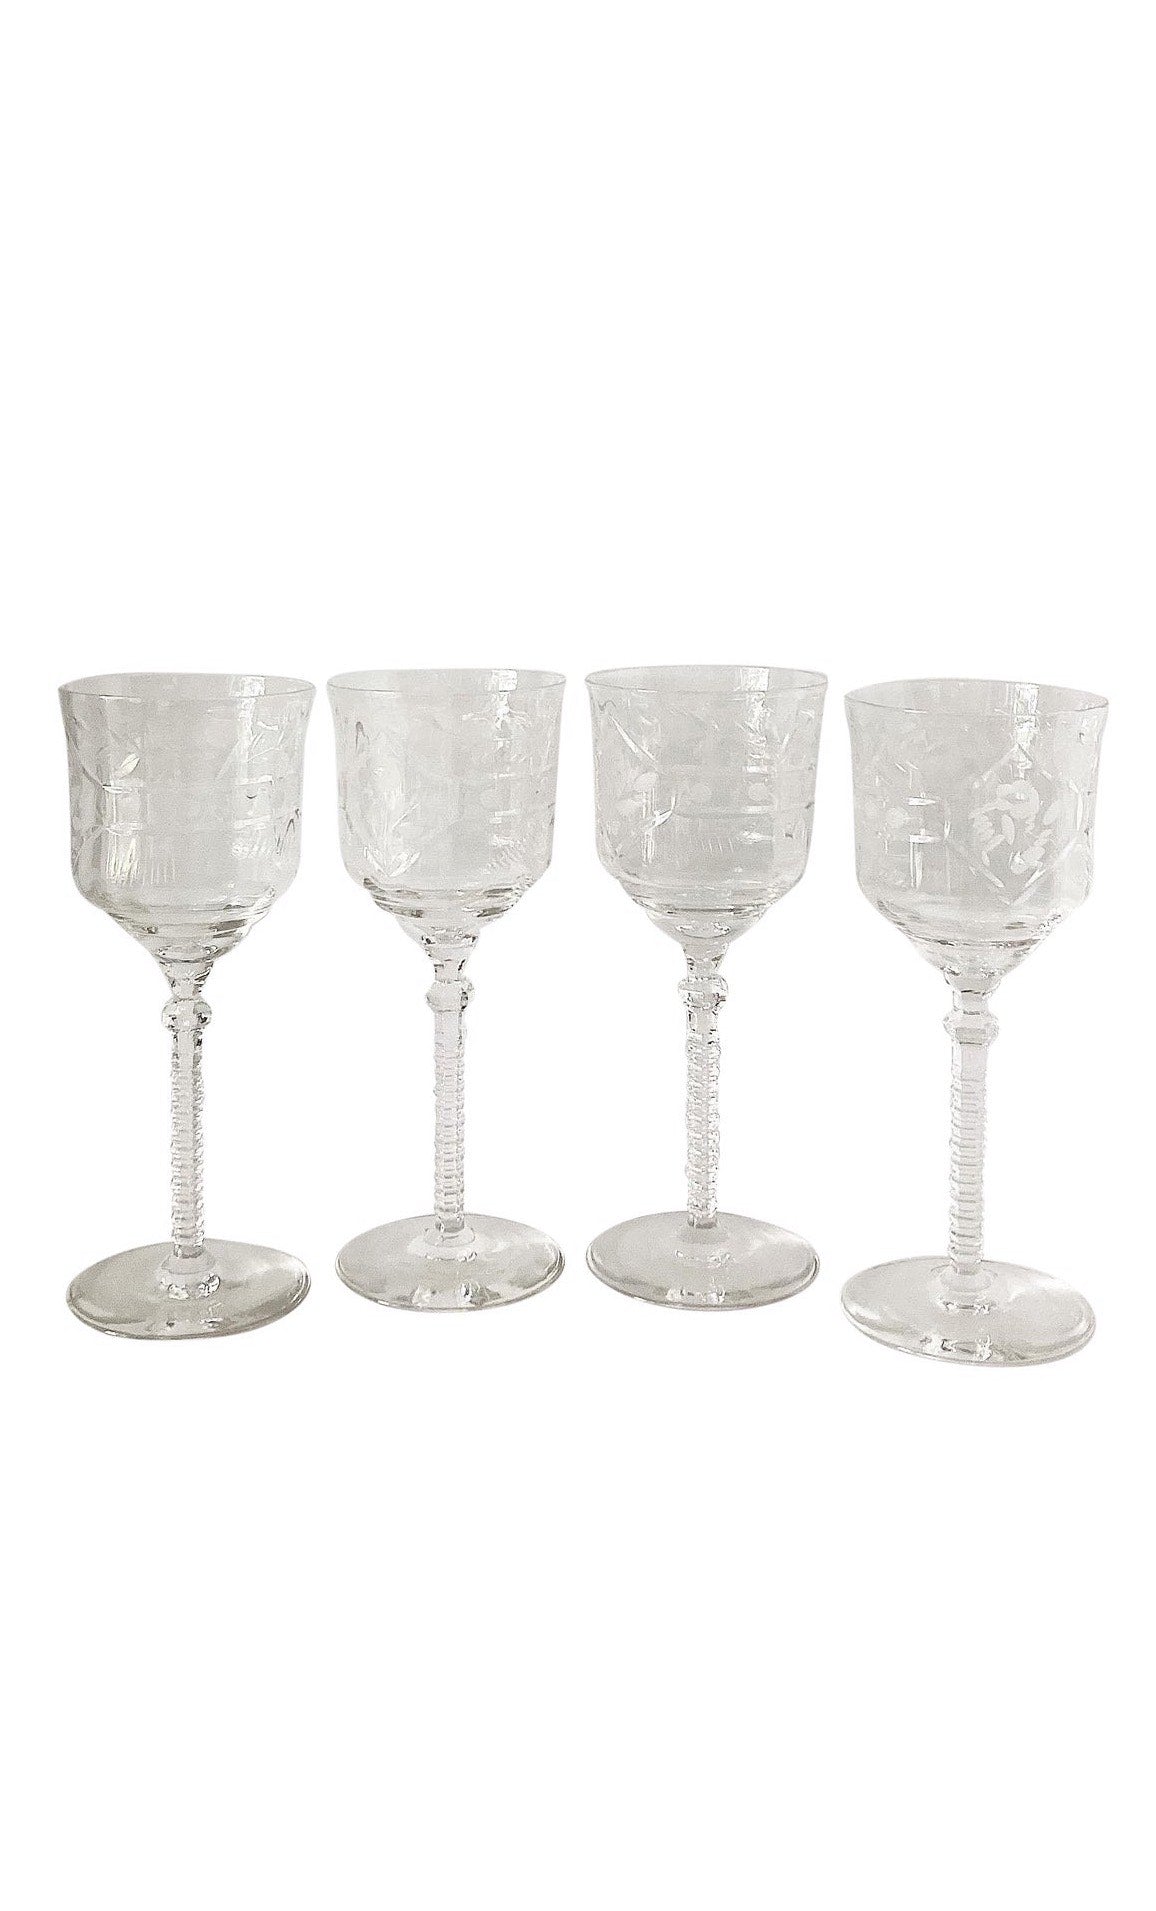 Vintage Cut Glass Cordial Glasses- Set of 4